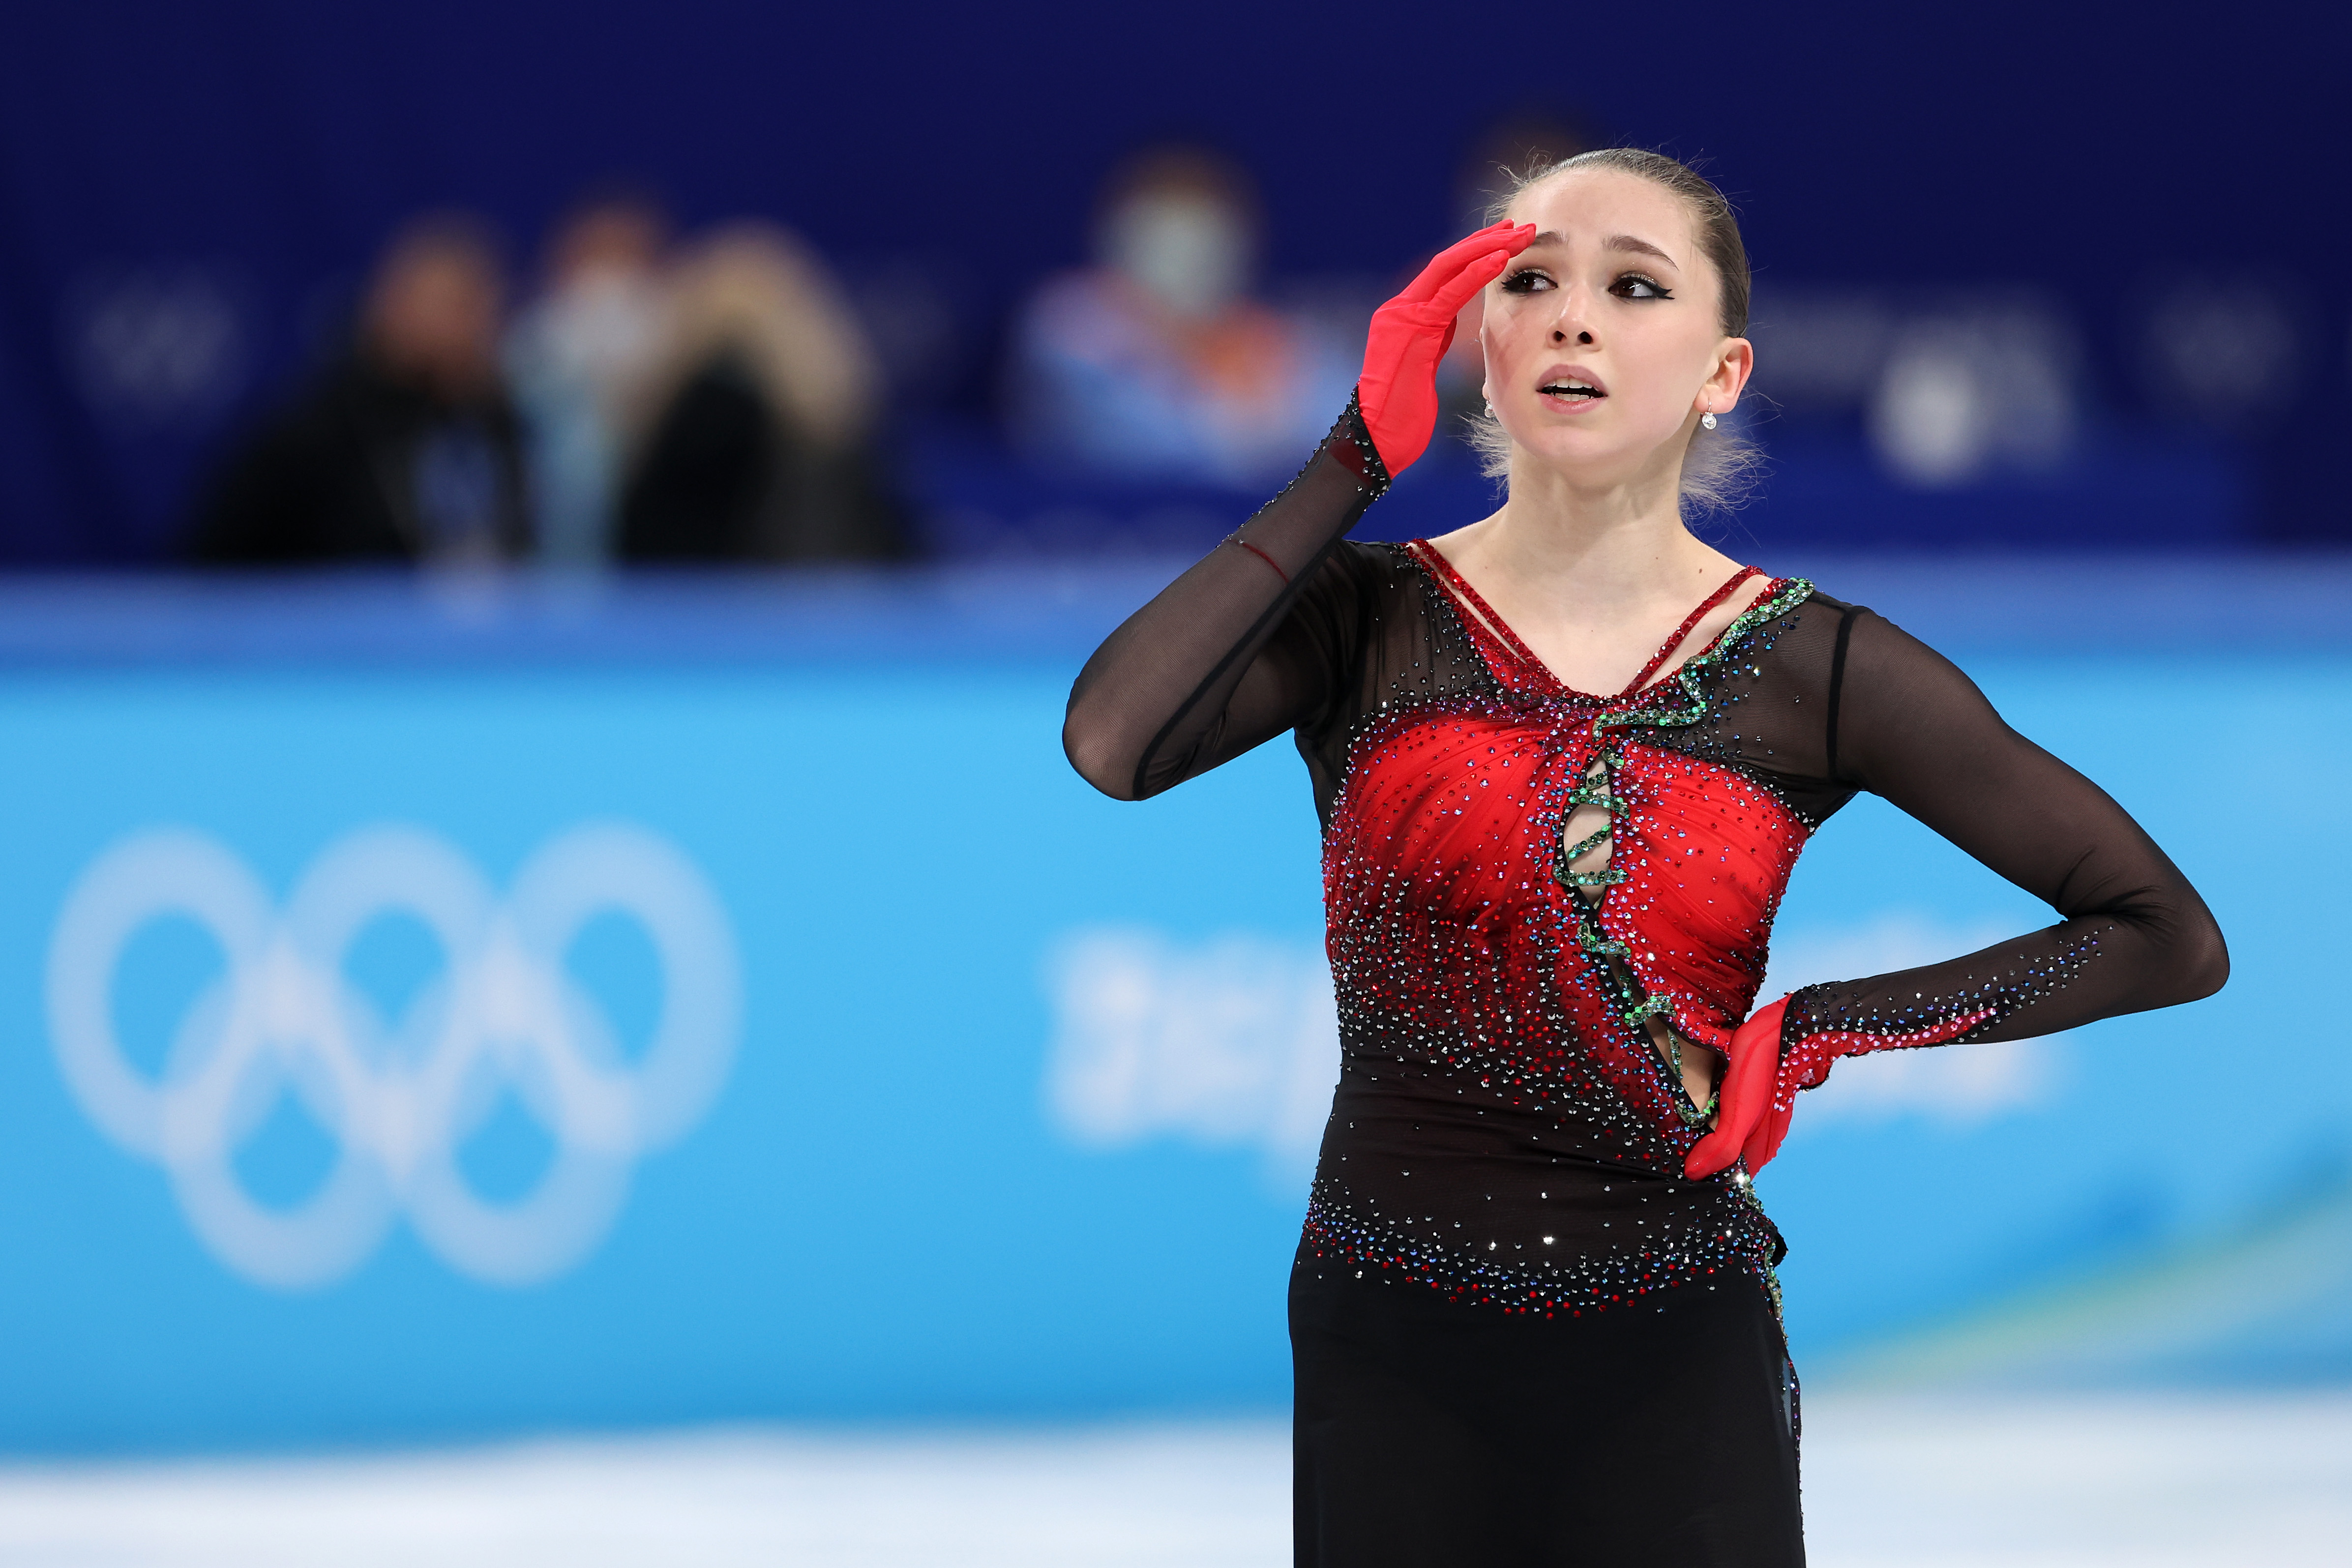 Kamila Valievas Winter Olympics Status Is Up to Urgent Hearing